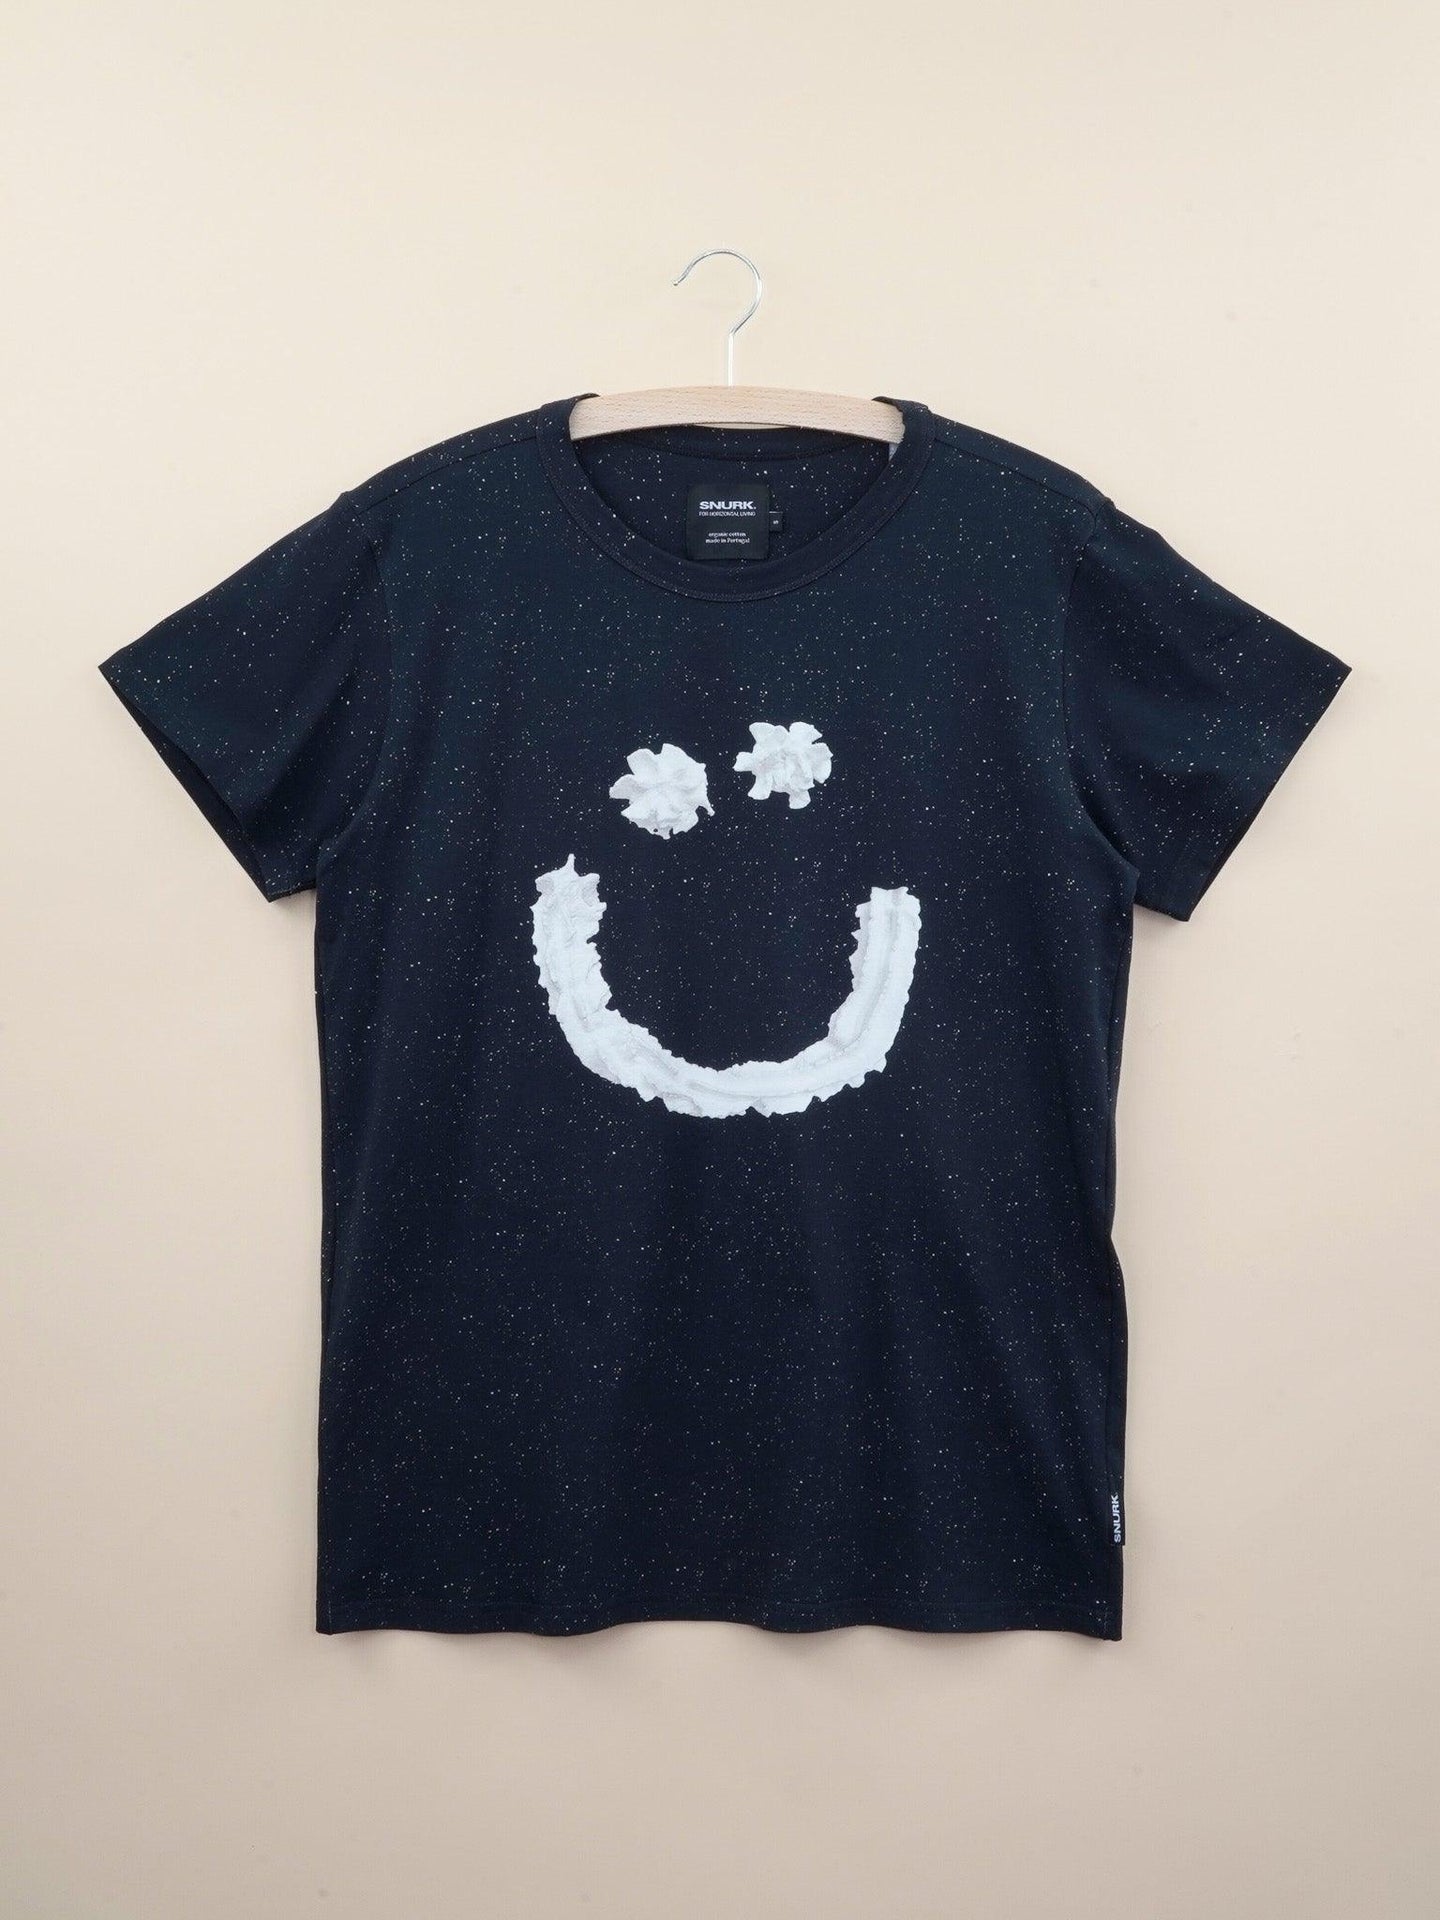 Smiles Black T-shirt Unisex - SNURK